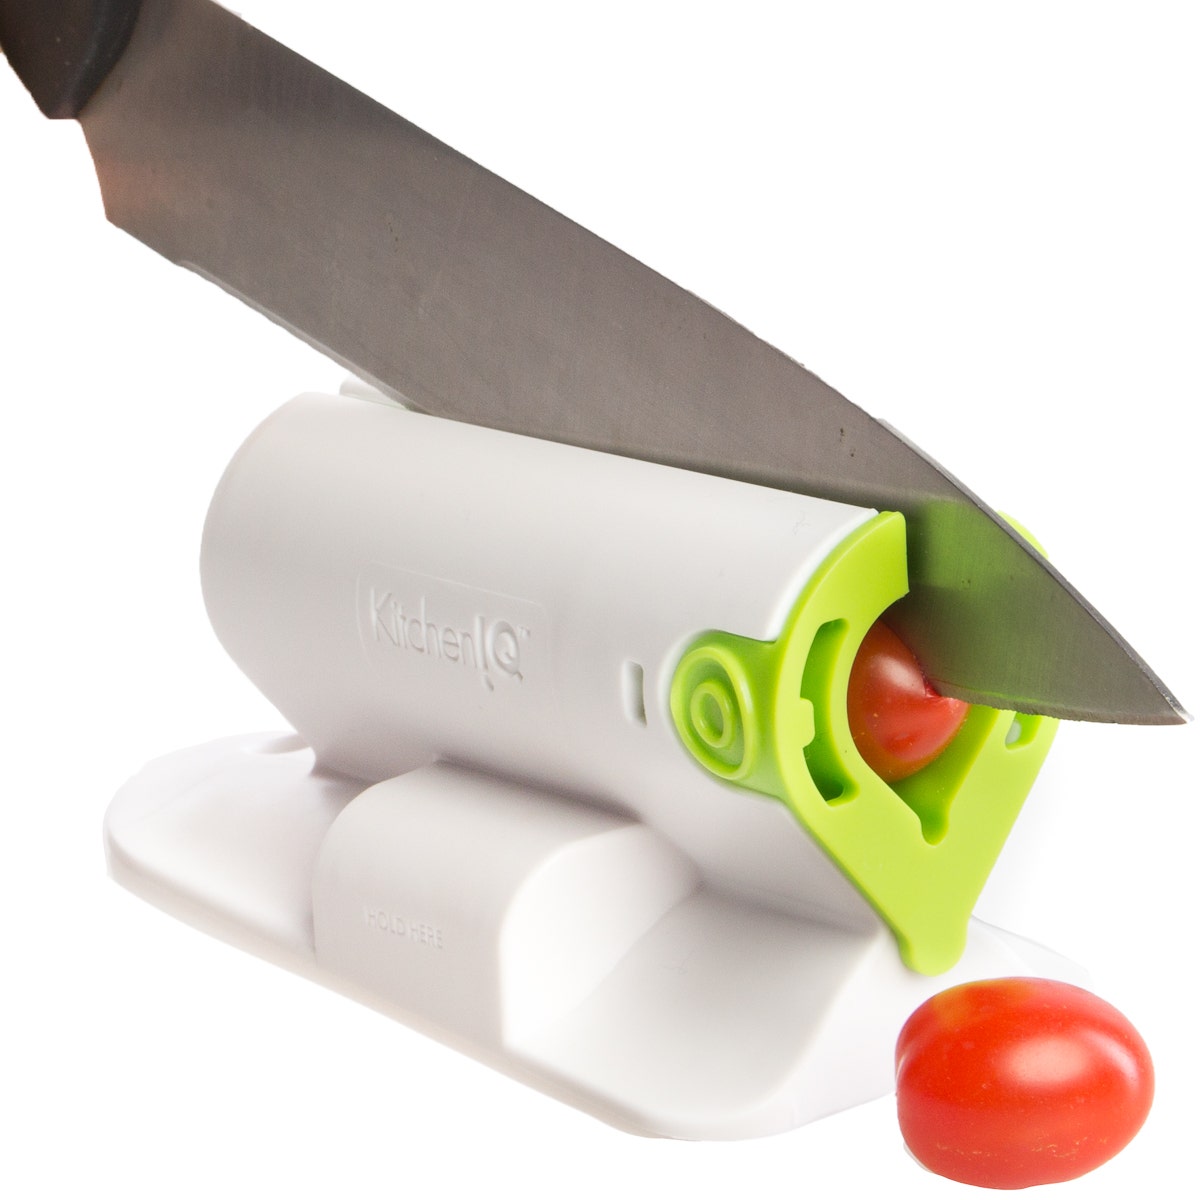 Multi-Purpose Vegetable Slicer: Slice with Ease